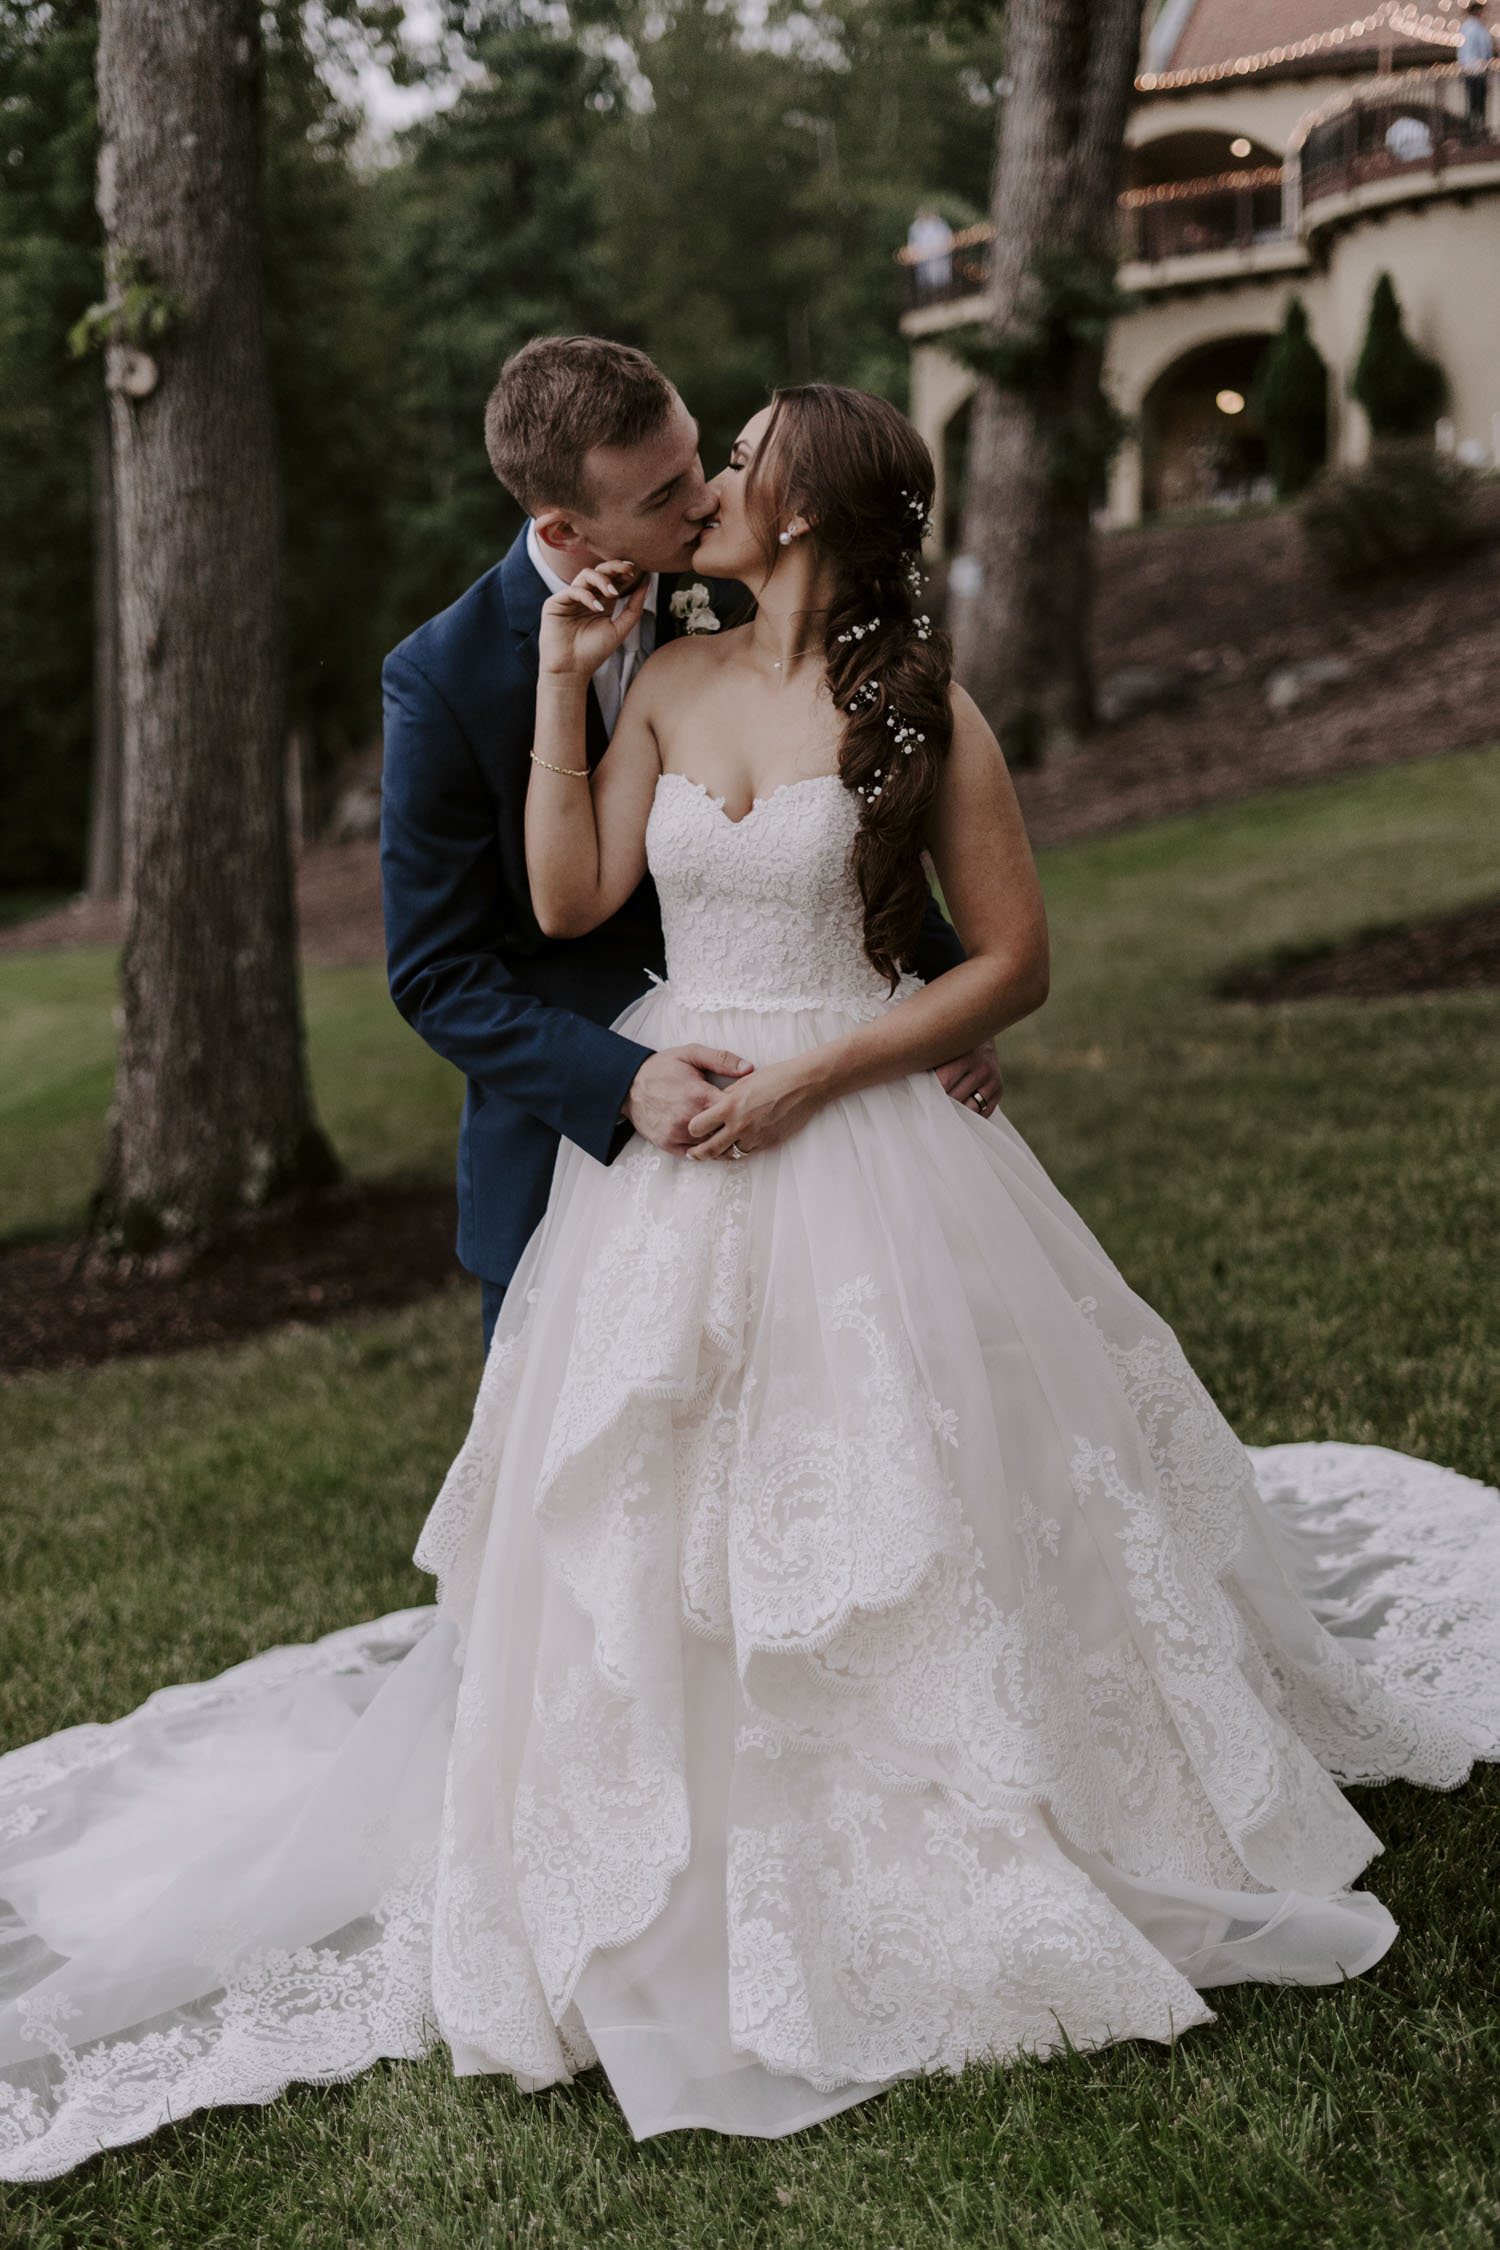 Rainy Bella Collina Wedding - Bride and Groom Newlywed Portraits | Kayli LaFon Photography, Greensboro Winston-Salem NC Wedding Photographer